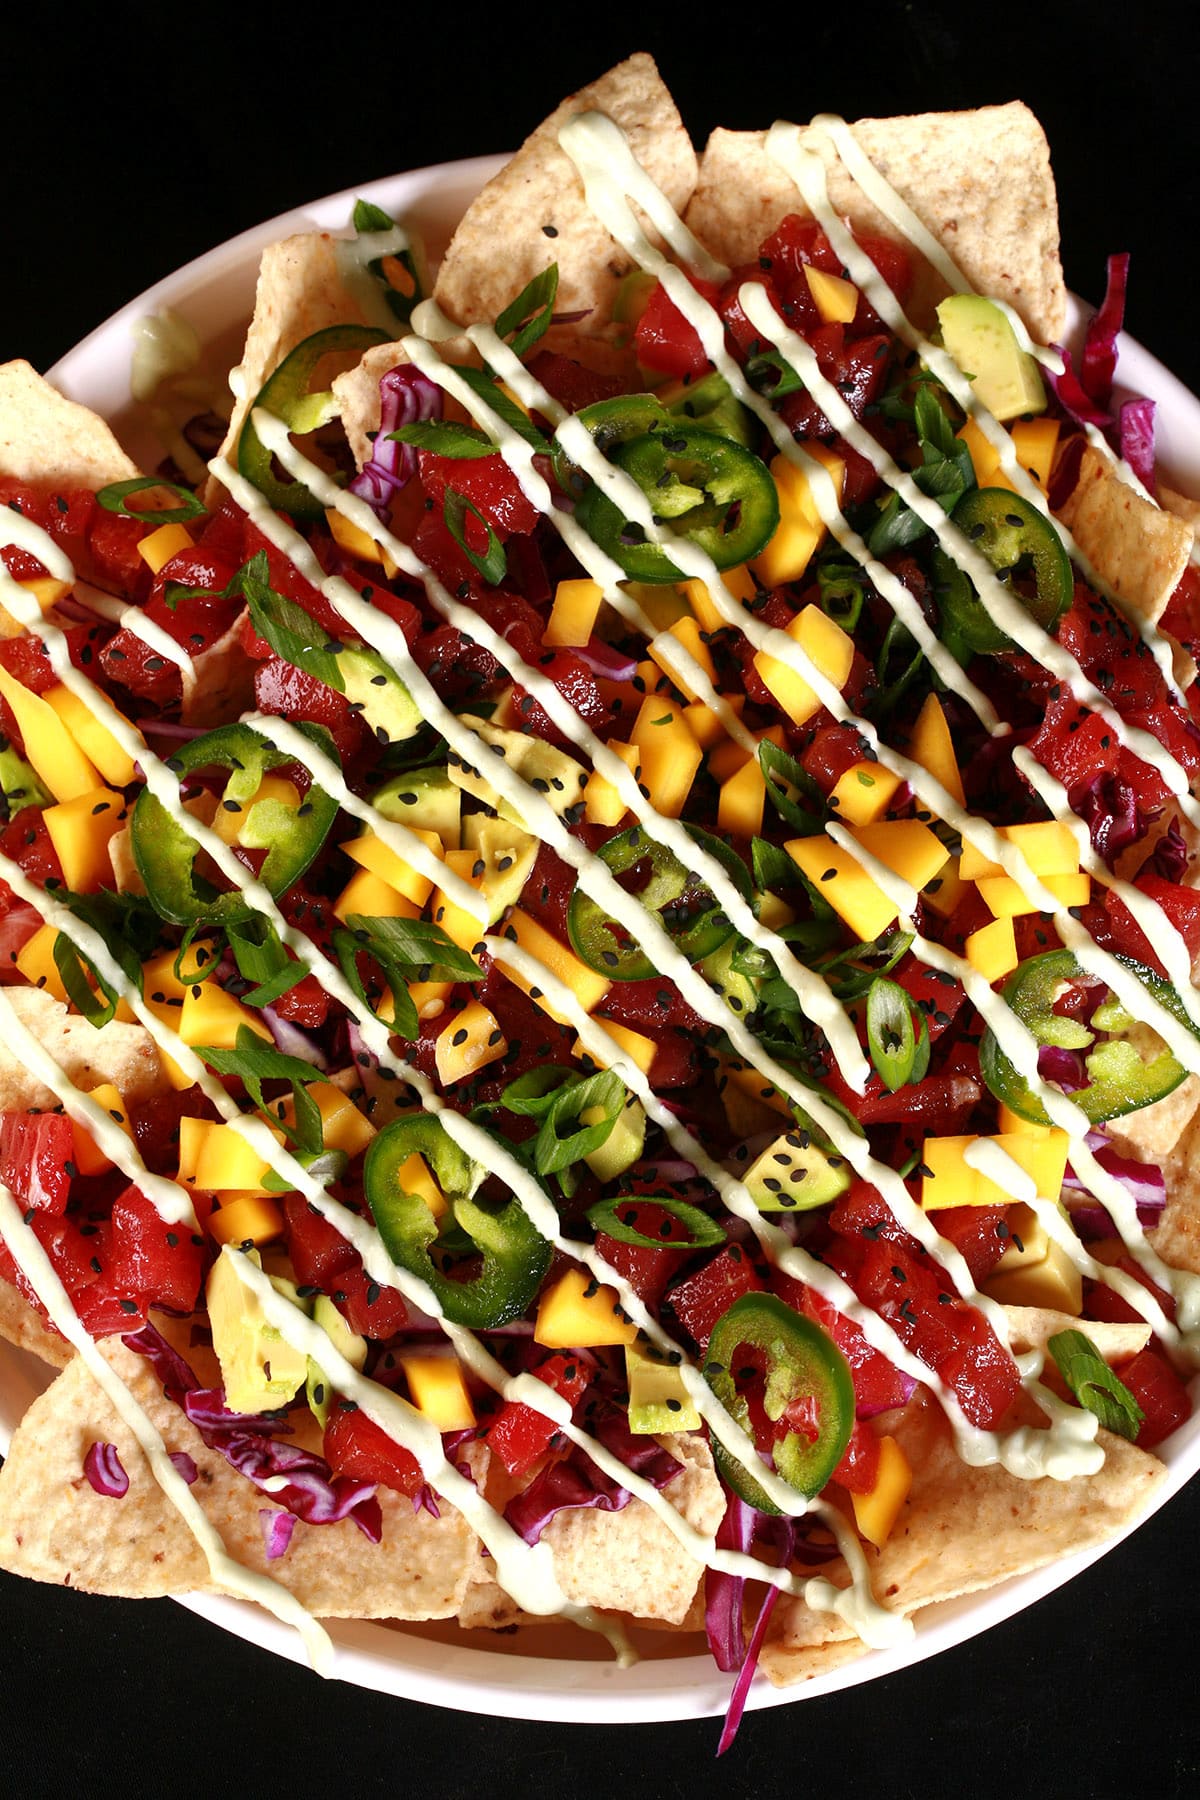 A platter of tuna poke nachos, with mango, avocado, purple cabbage, jalapeno slices, and wasabi mayo.